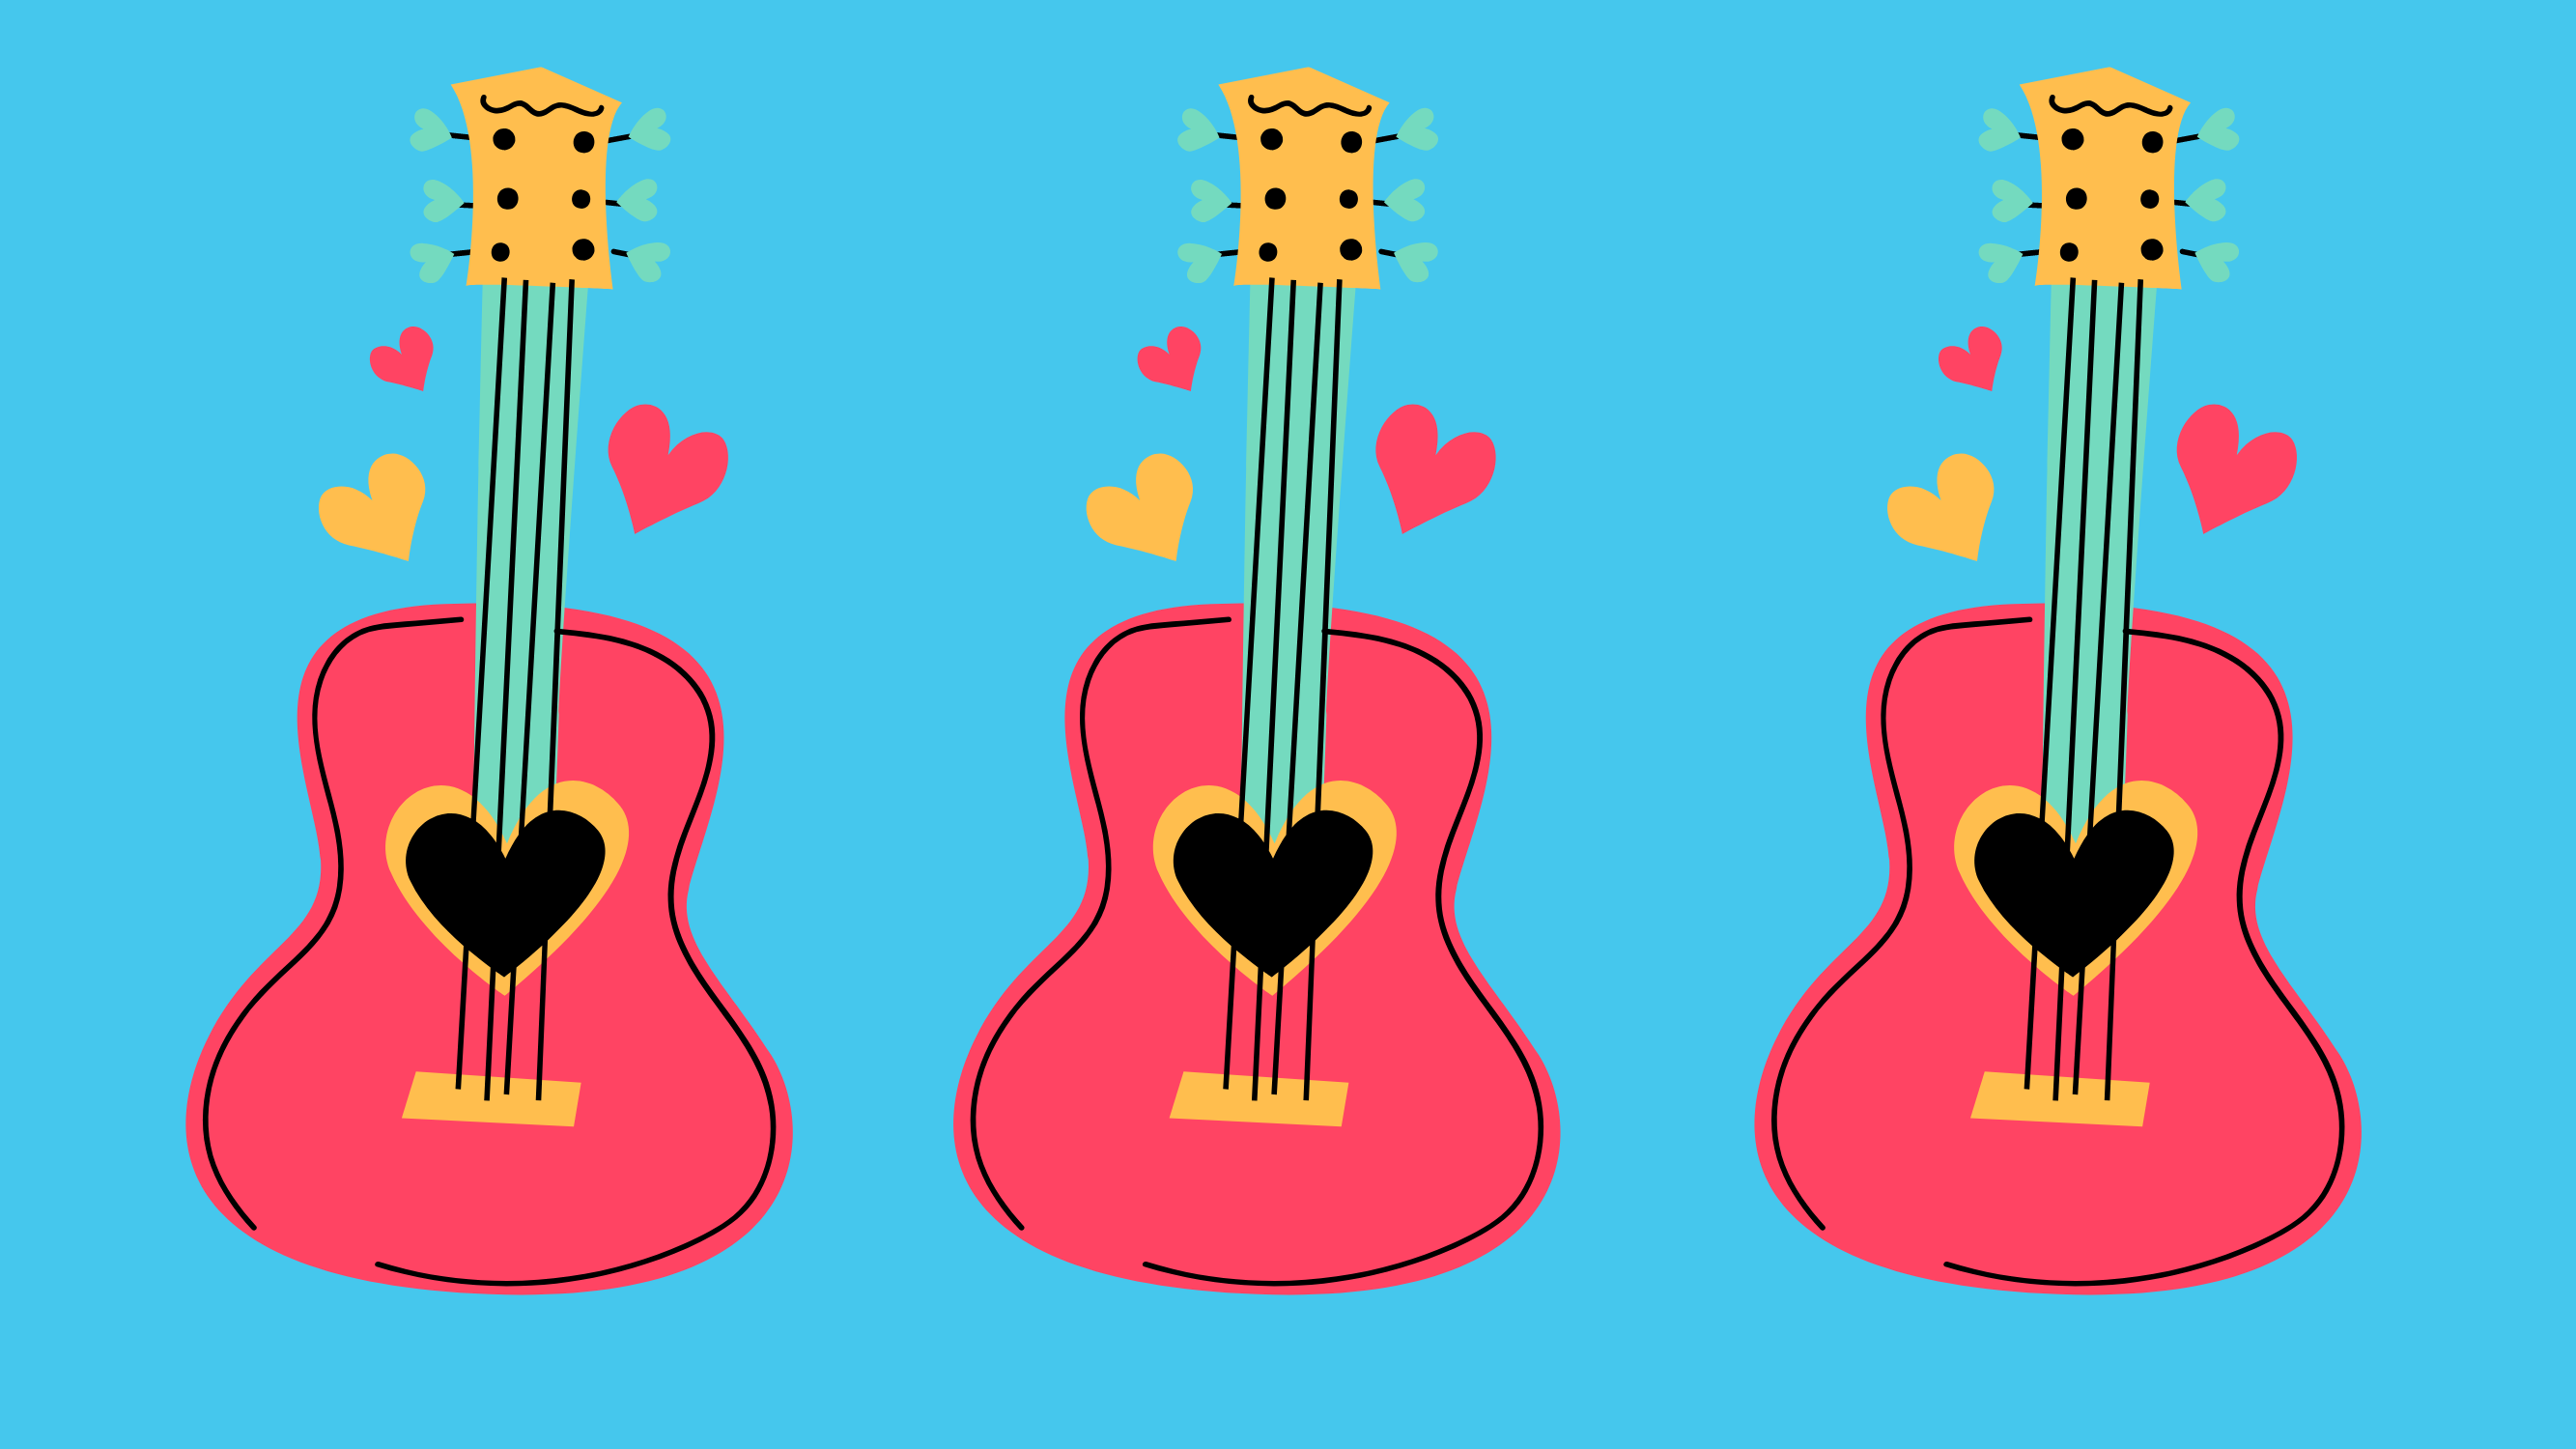 Musical Storytime Image of Three Guitars